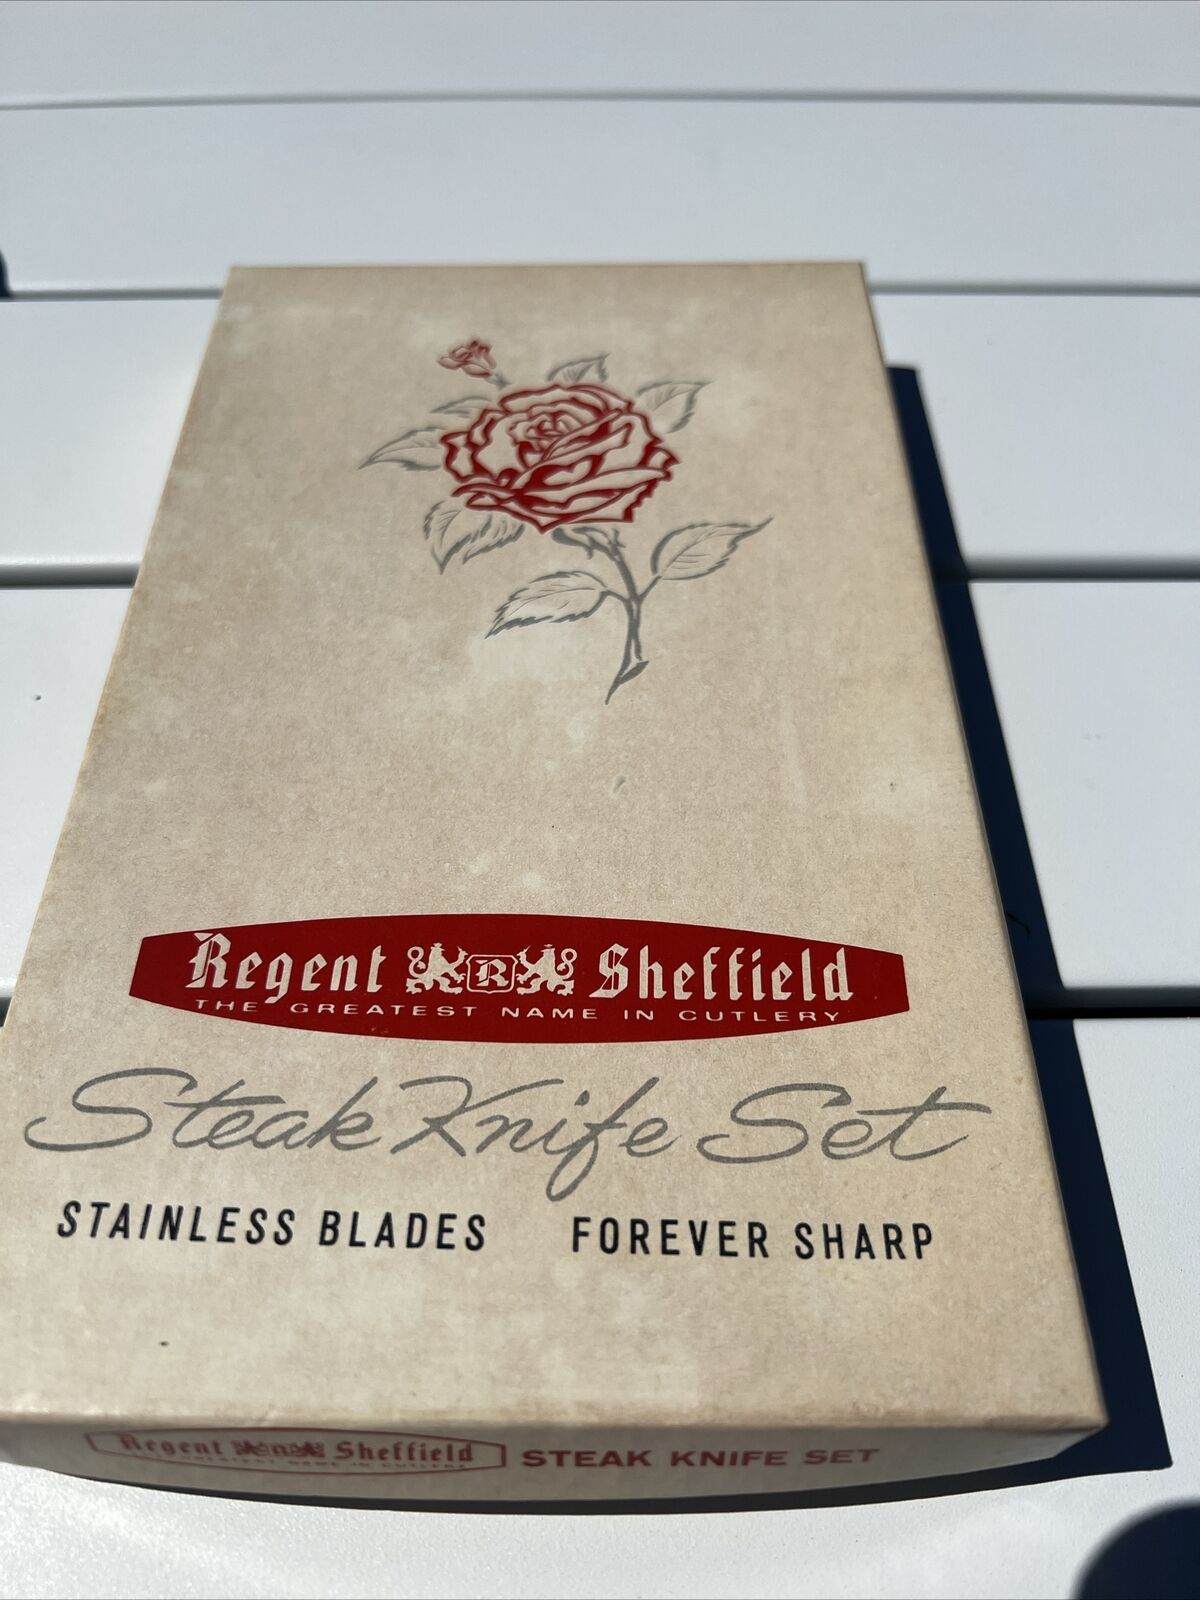 Regent Sheffield Steak Knife Set Vintage Stainless Blades Forever Sharp-New